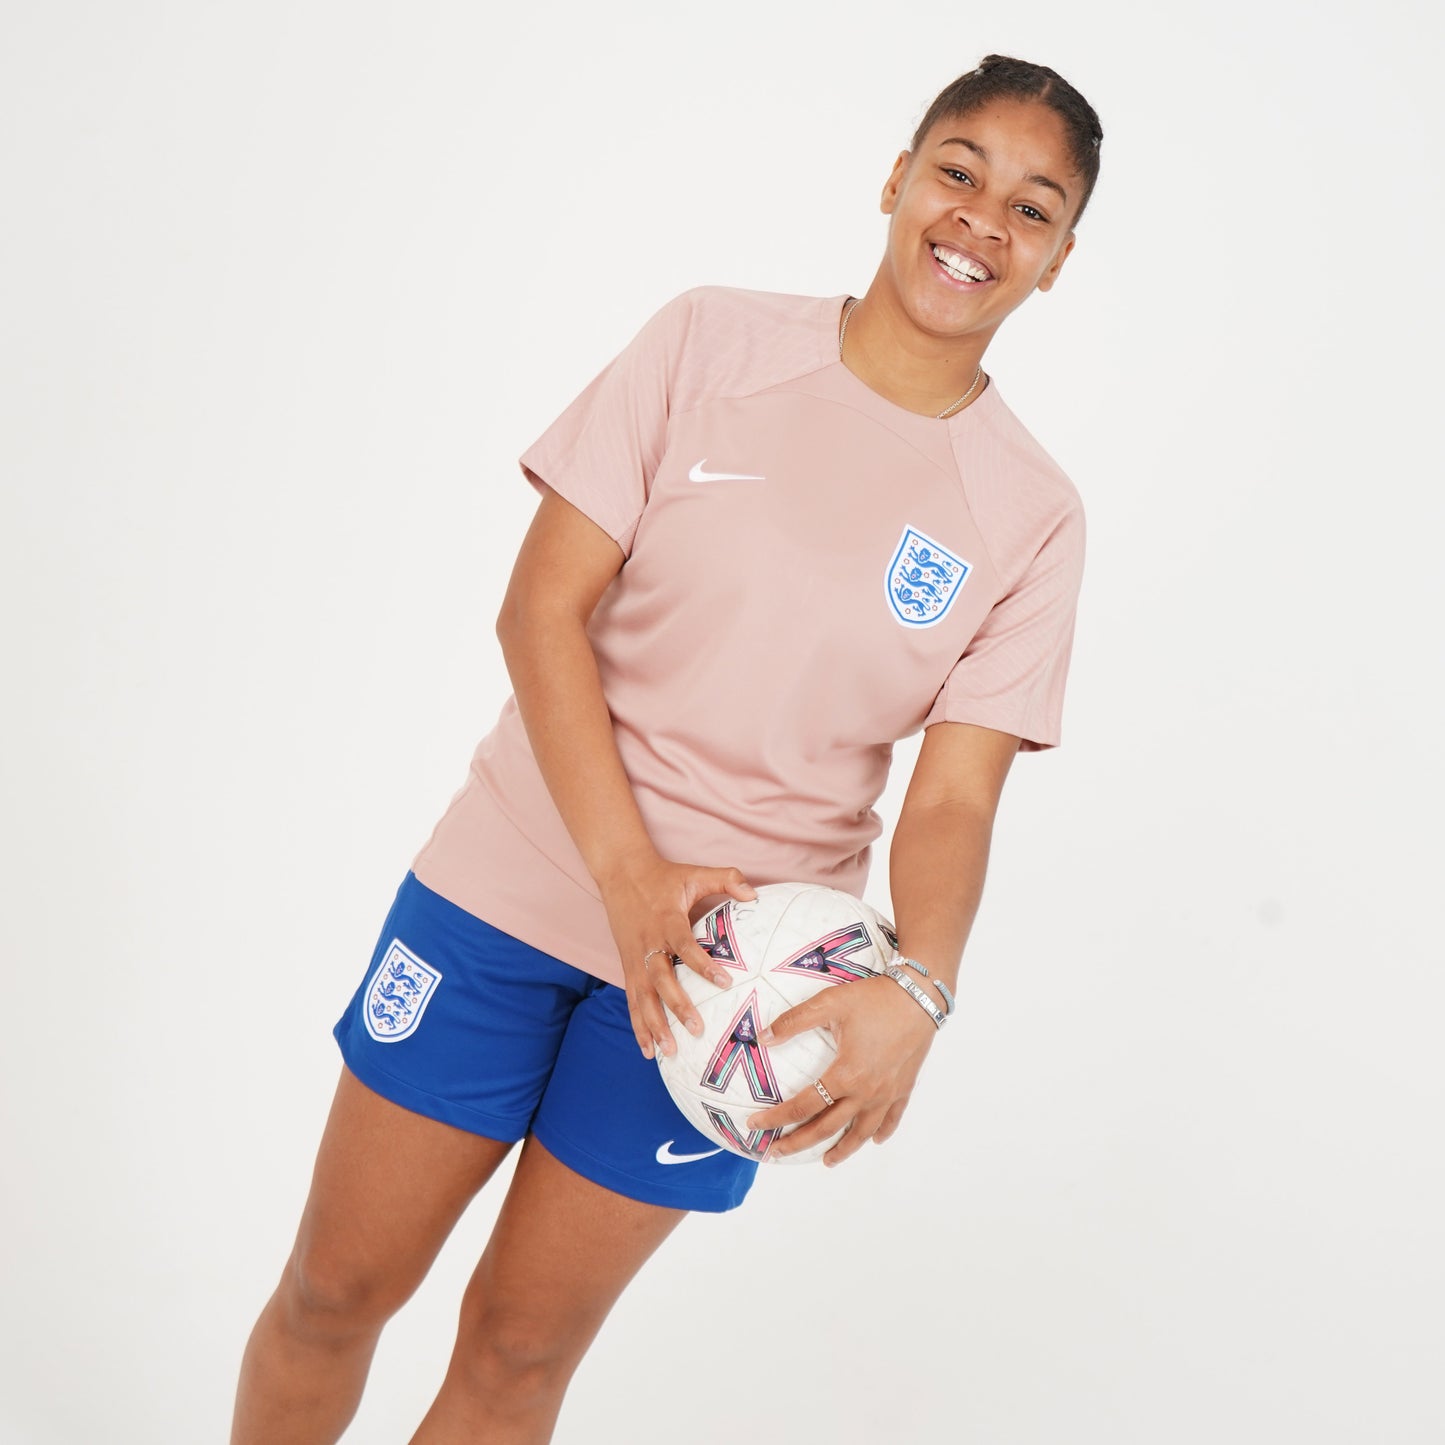 England Strike Women's Nike Dri-FIT Knit Soccer Drill Top